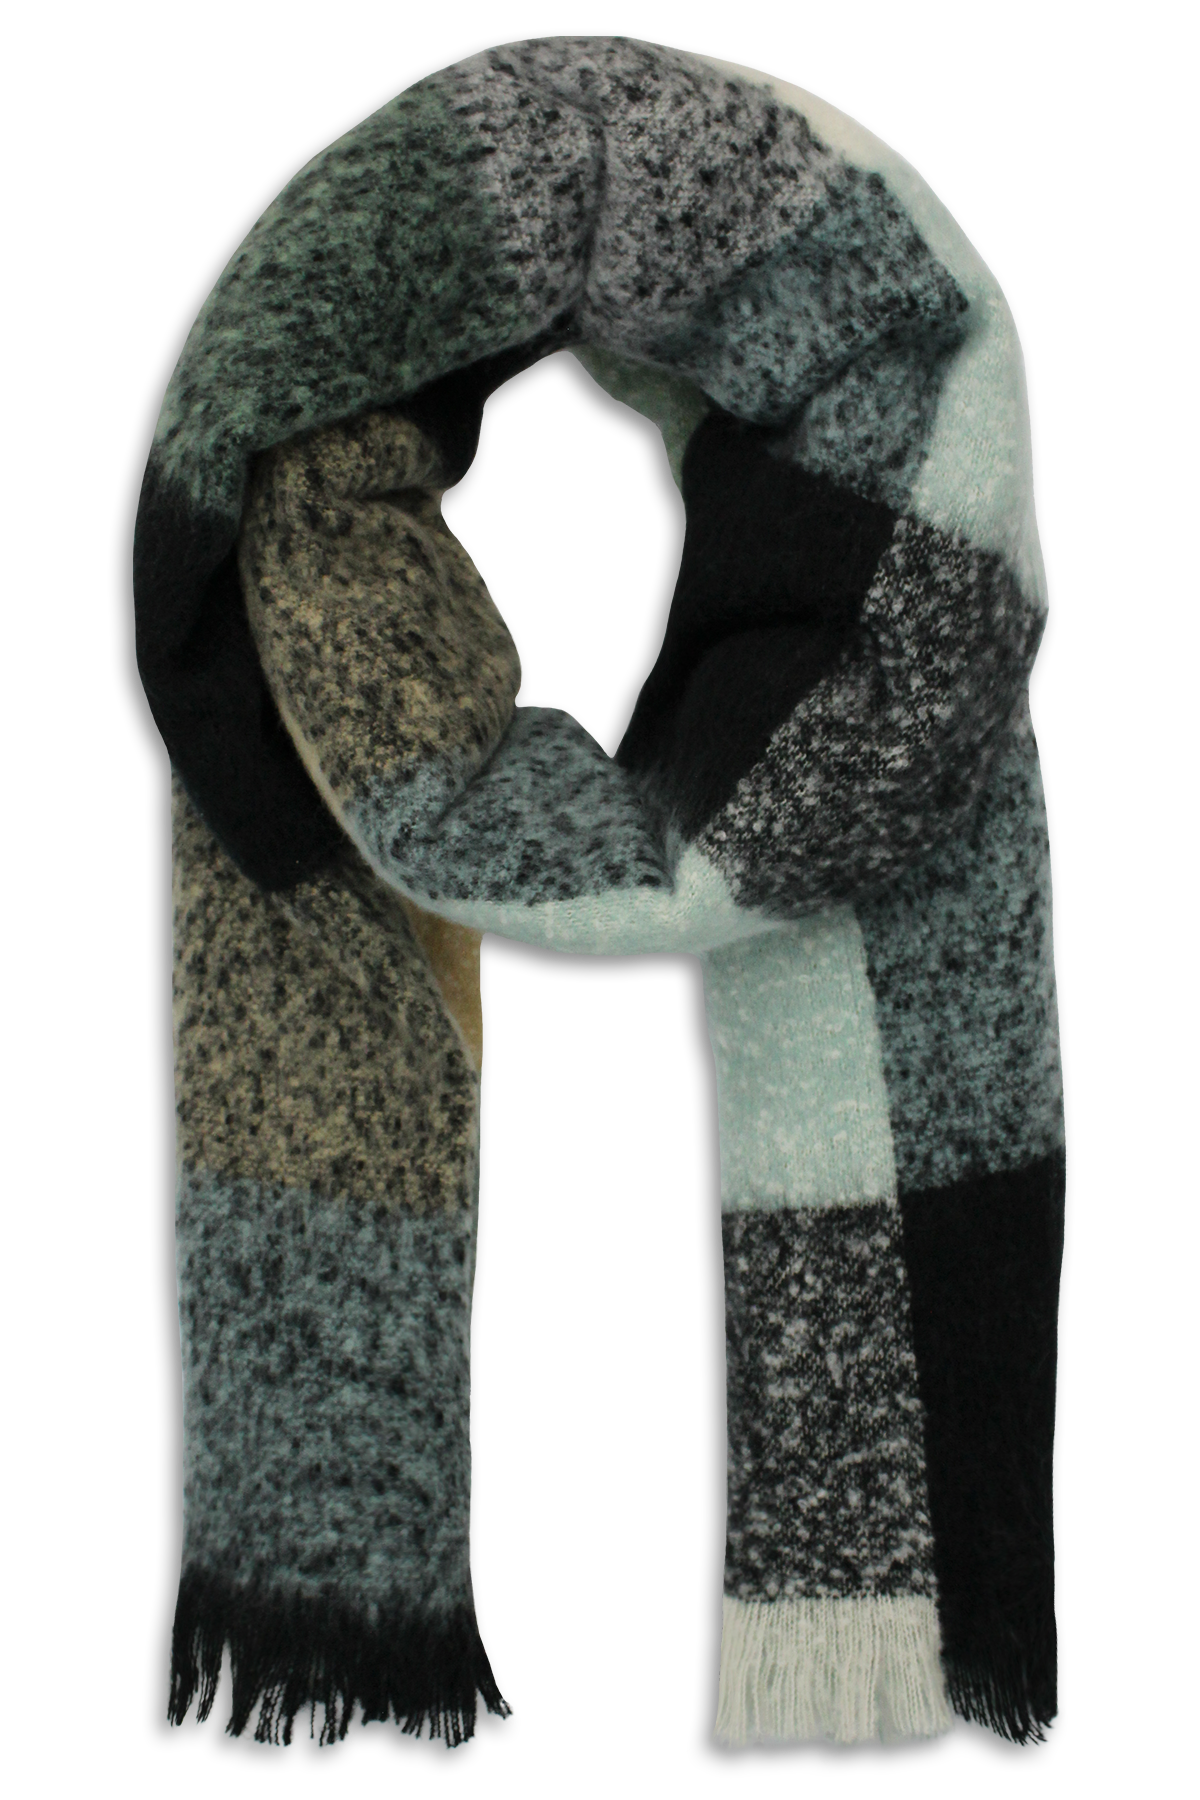 DOFOWORK Scarfs for Women - Scarves for Women Winter Warm, 55 x